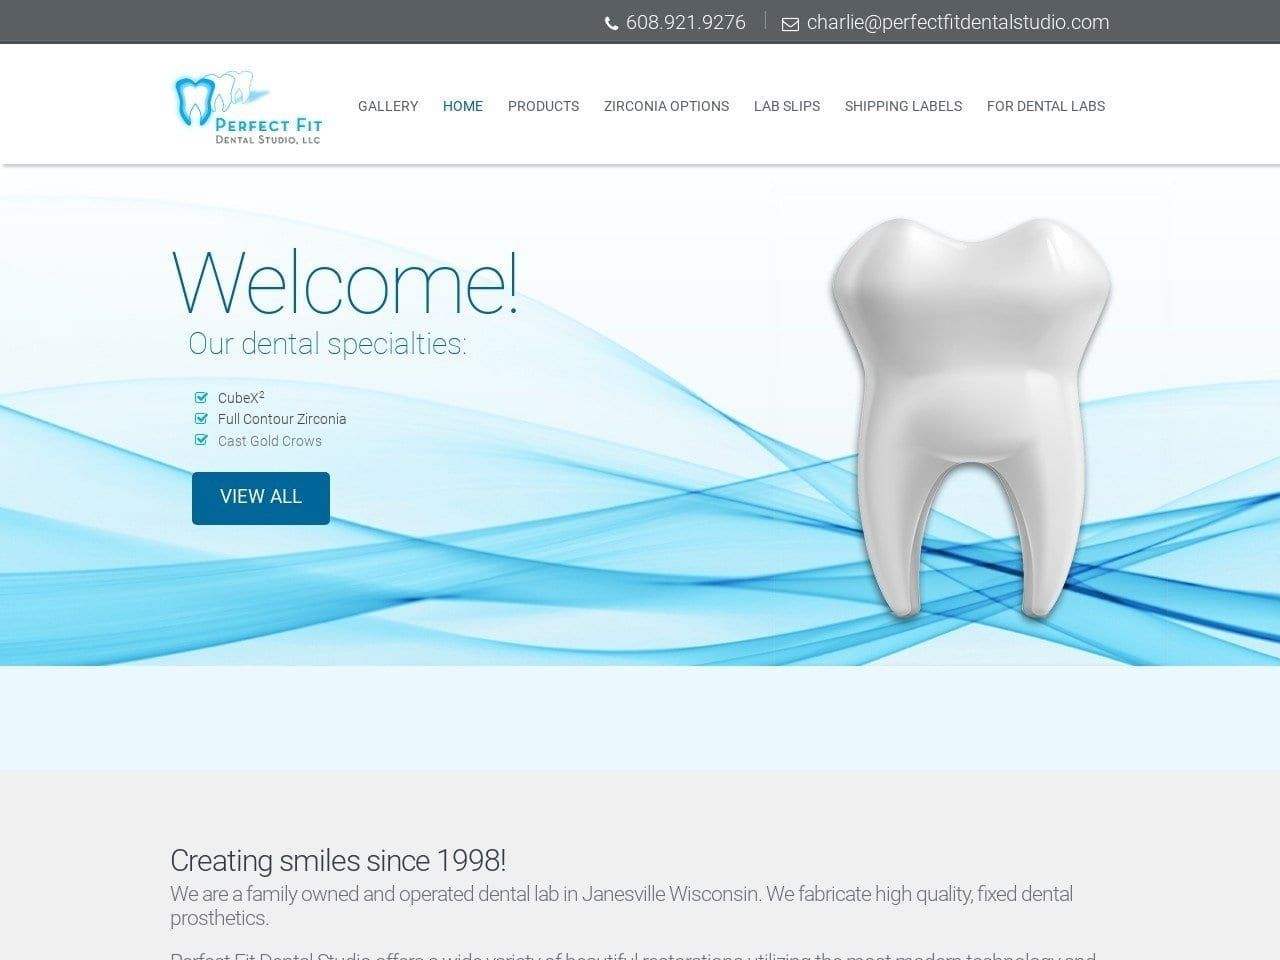 Perfect Fit Dental Studio LLC Website Screenshot from perfectfitdentalstudio.com